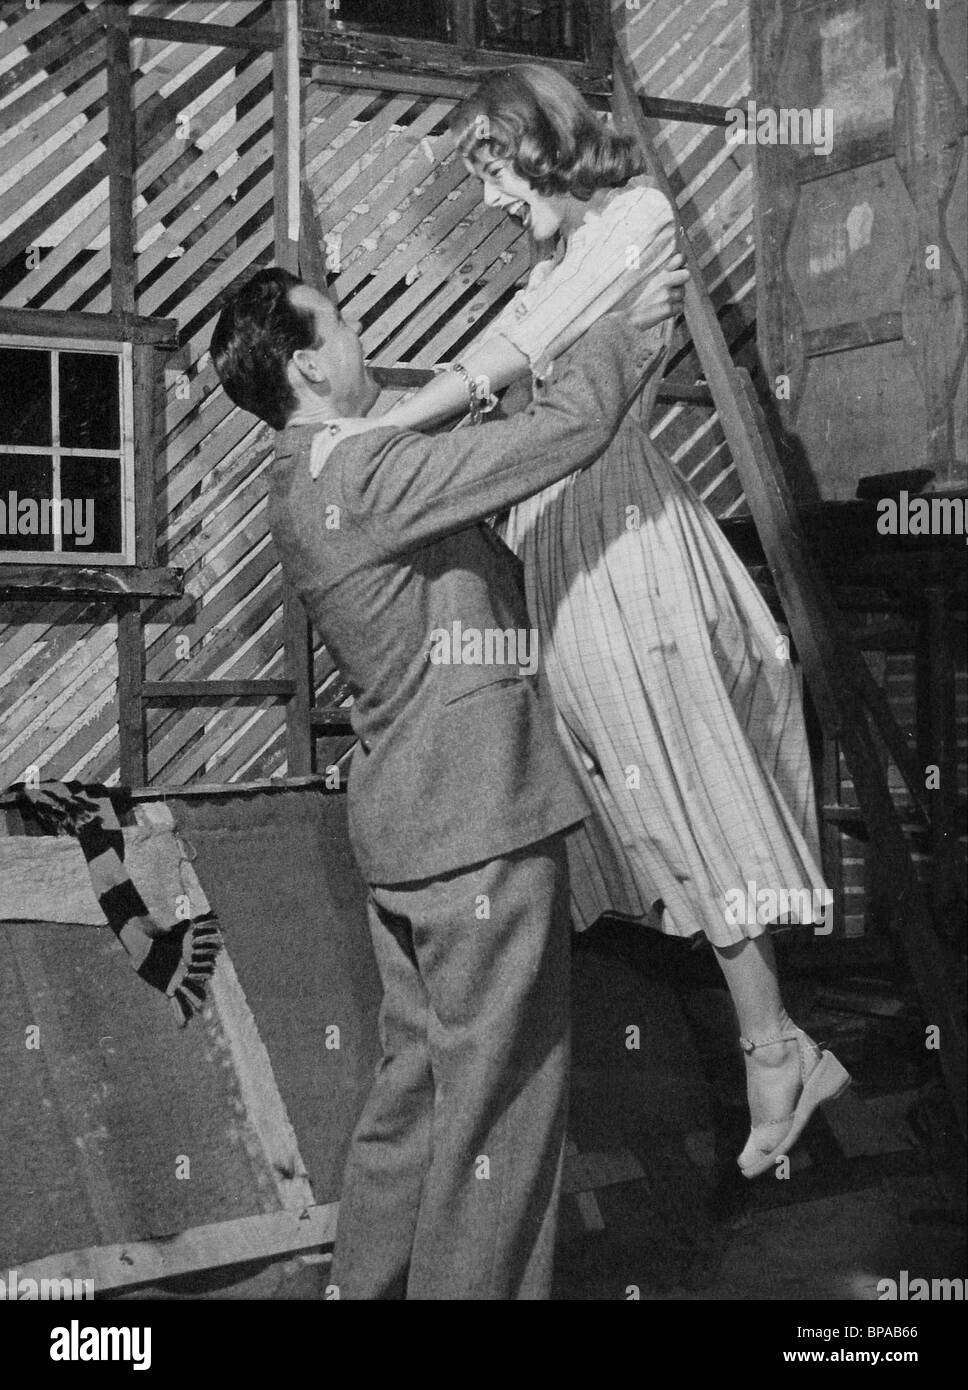 NIGEL BUCHANAN, SALLY ANN HOWES, FOOLS RUSH IN, 1949 Stock Photo